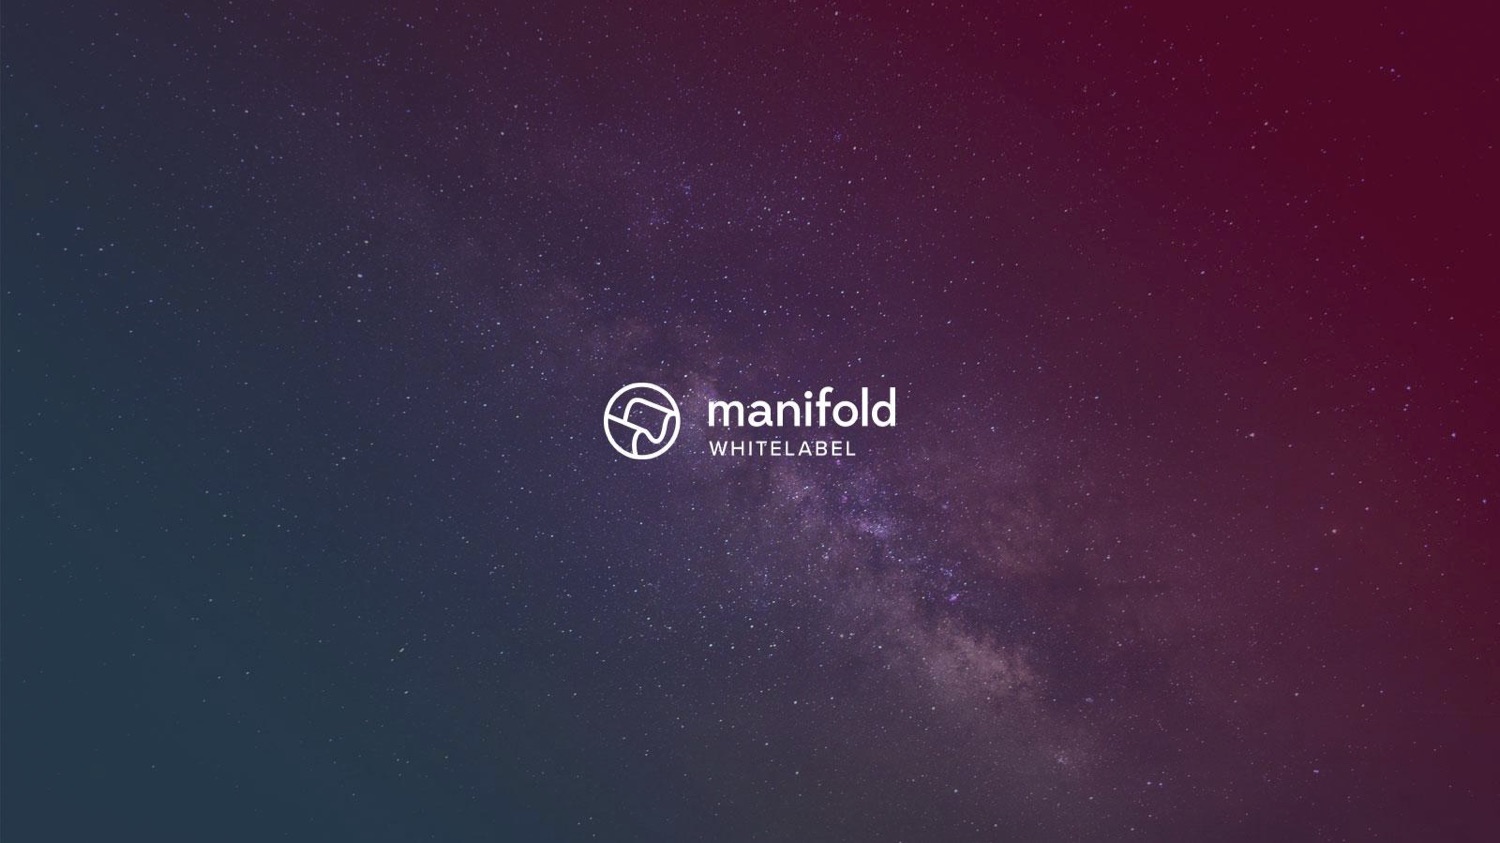 (V2a) Introducing Manifold Whitelabel (Tim).jpg